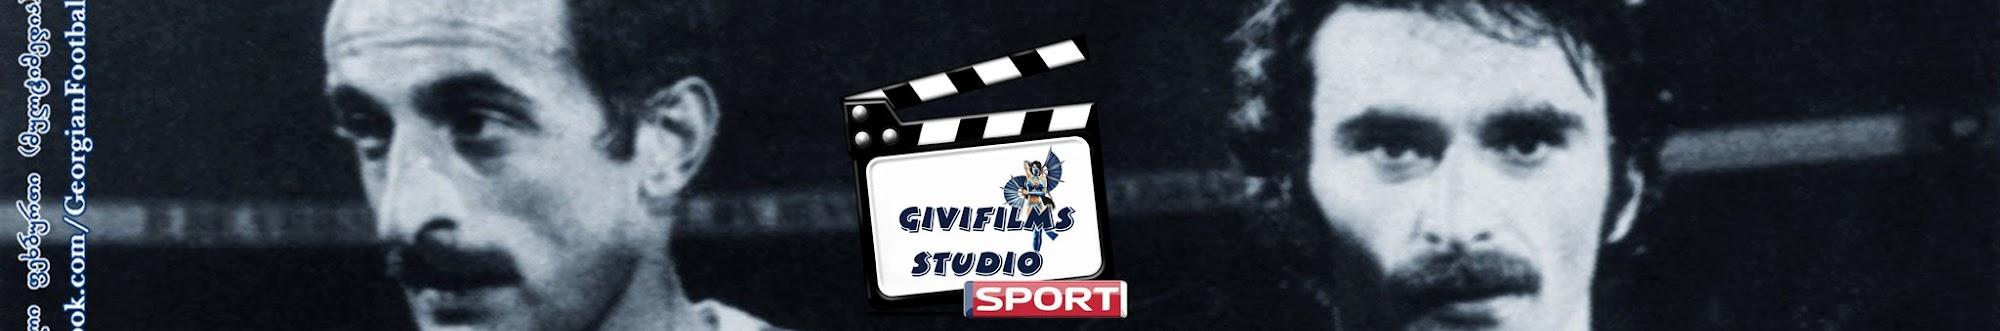 Givi Films Georgian Football